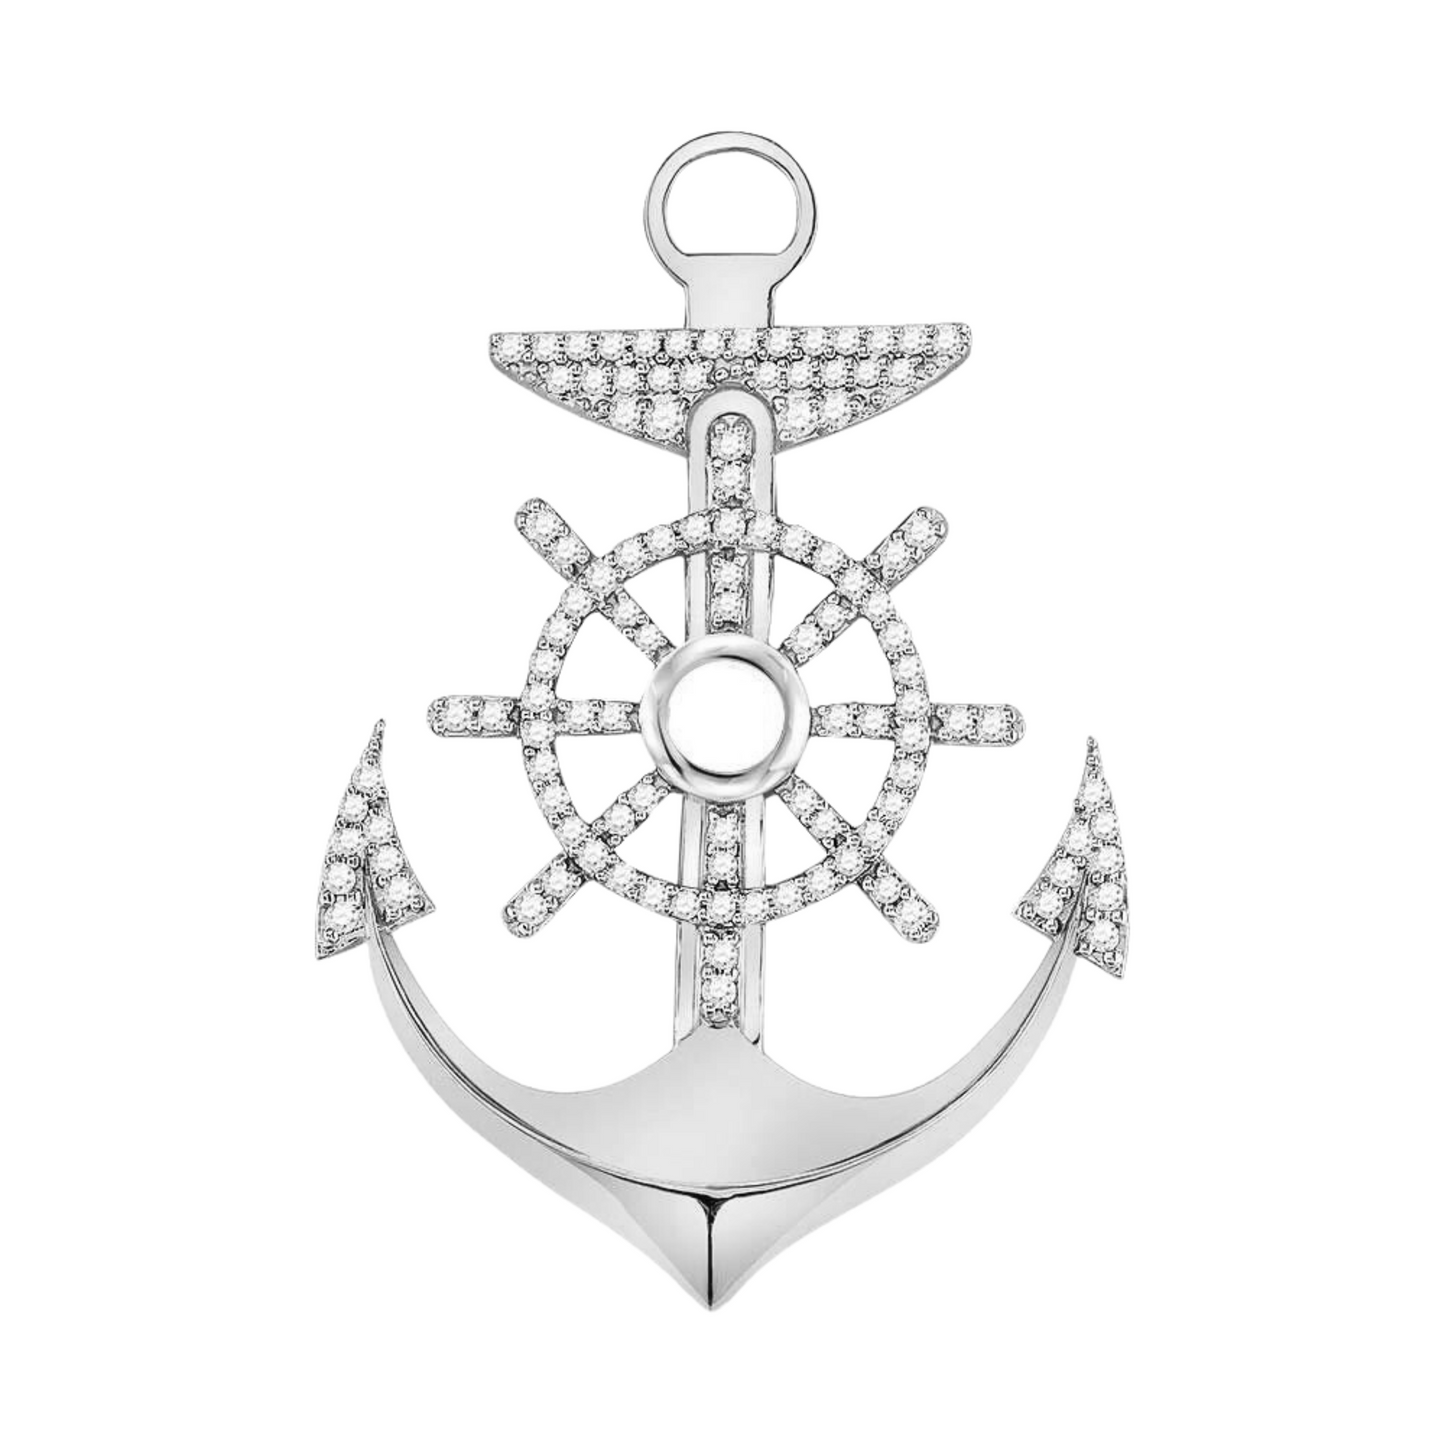 Gold Diamond Anchor Wheel Nautical Charm Pendant - 10KT Gold